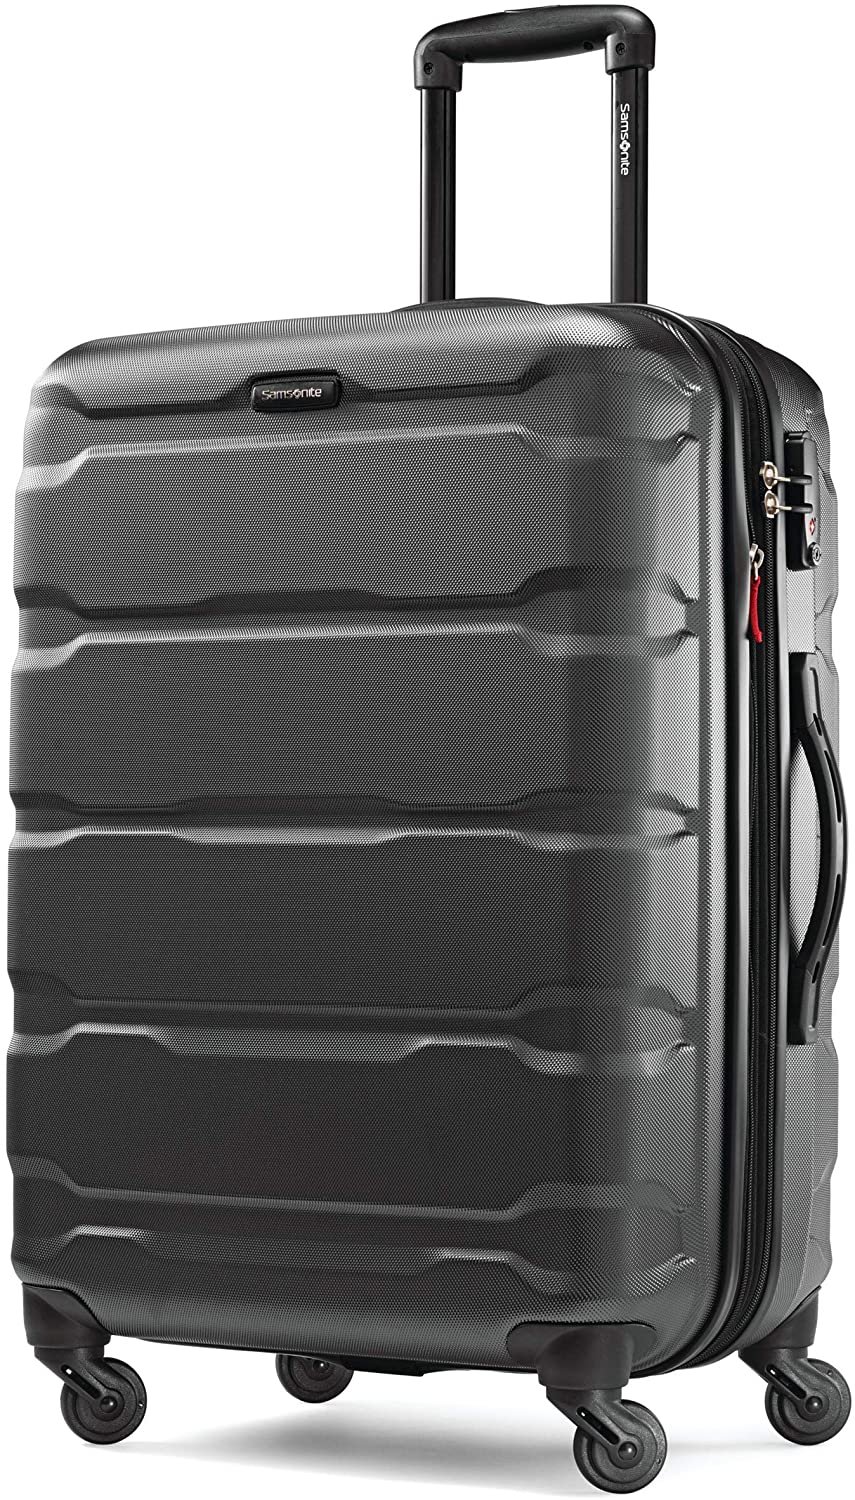 Samsonite Omni PC Hardside Expandable Luggage with Spinner Wheels.jpg